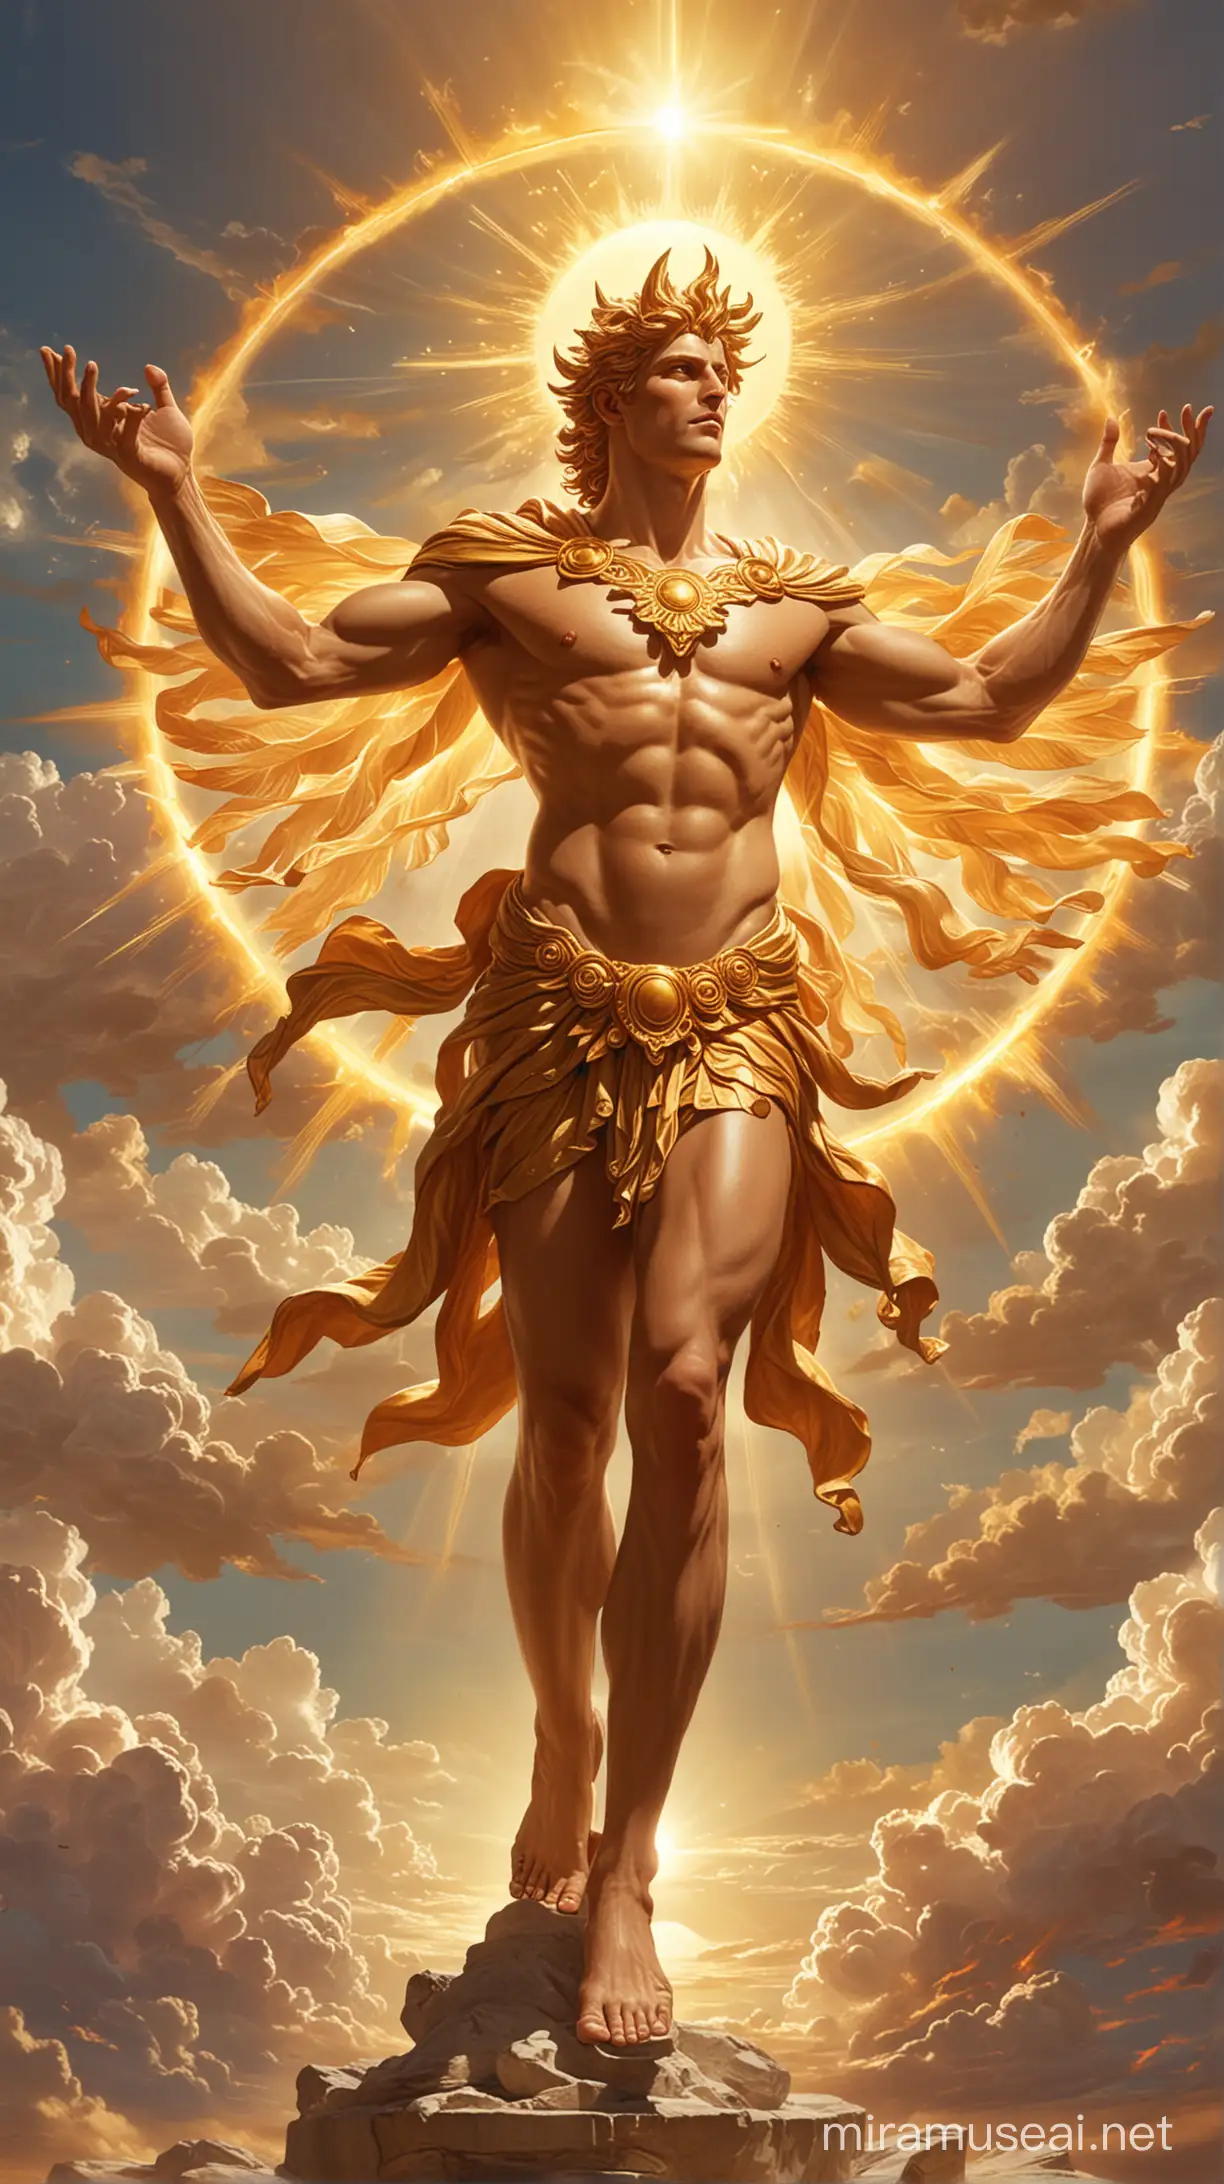 Majestic Helios Illuminates the Ancient Greek Sky